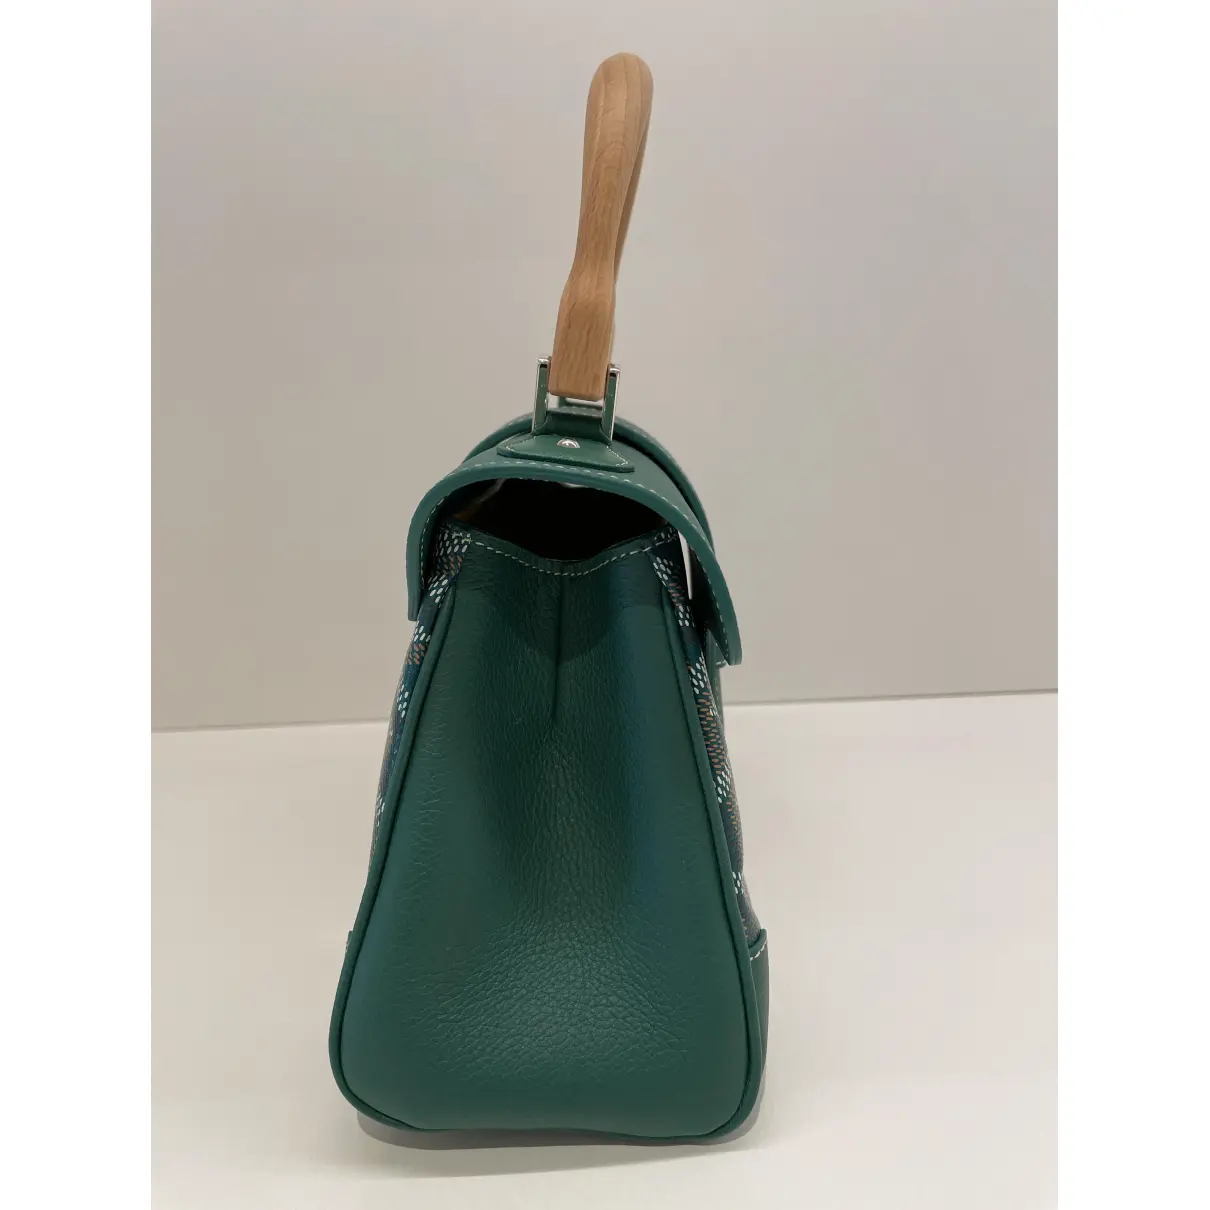 Buy Goyard Saïgon leather handbag online